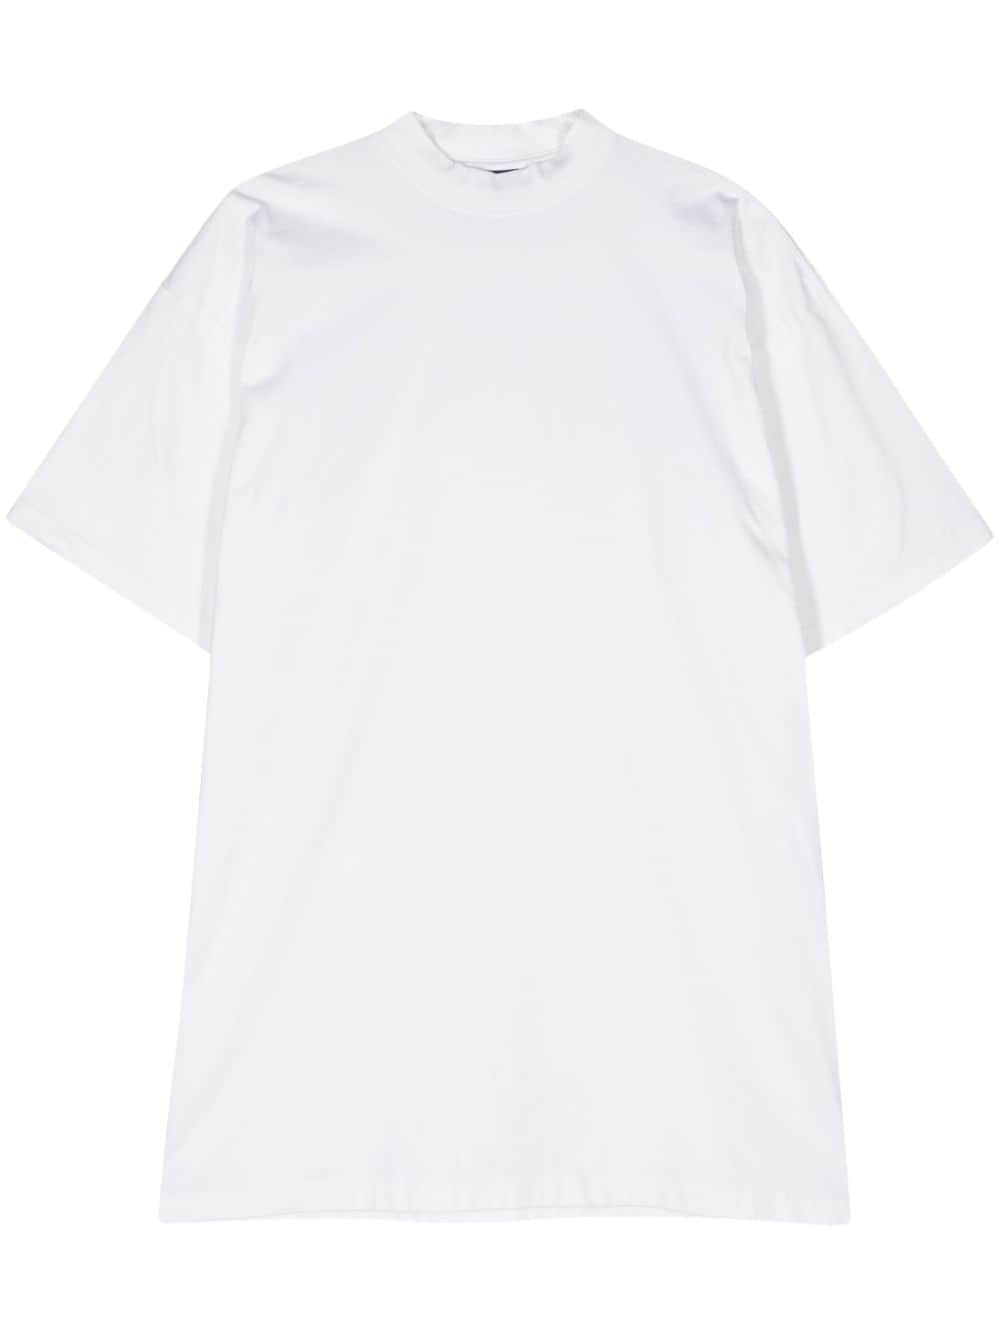 Balenciaga logo-print cotton T-shirt dress - White